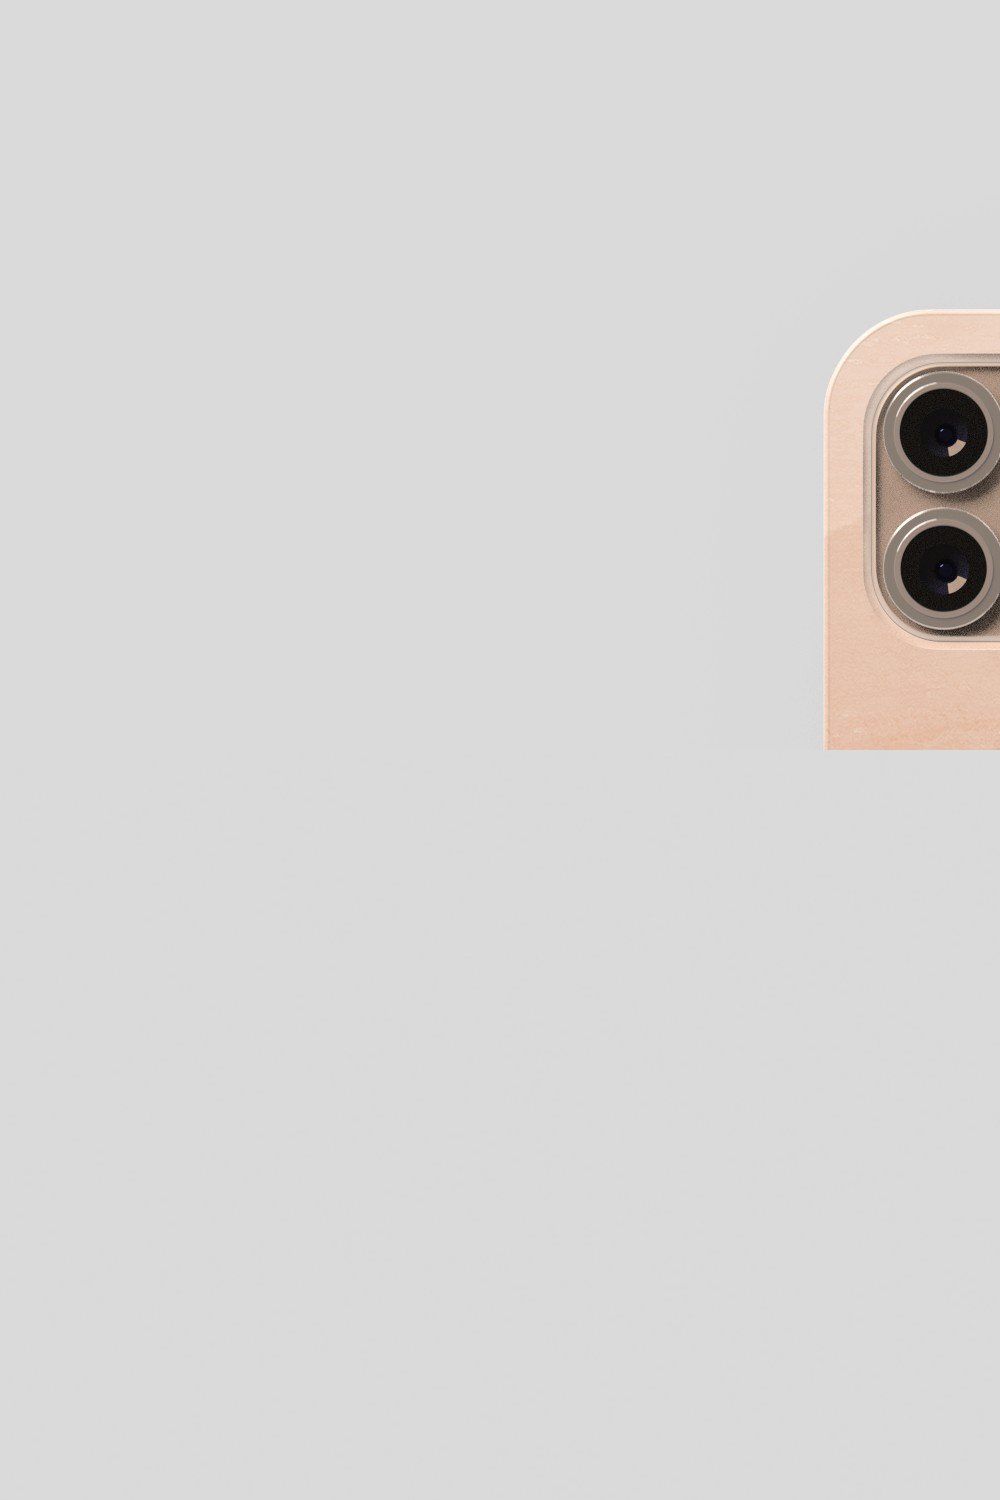 Phone 12 Pro Case Mockup pinterest preview image.